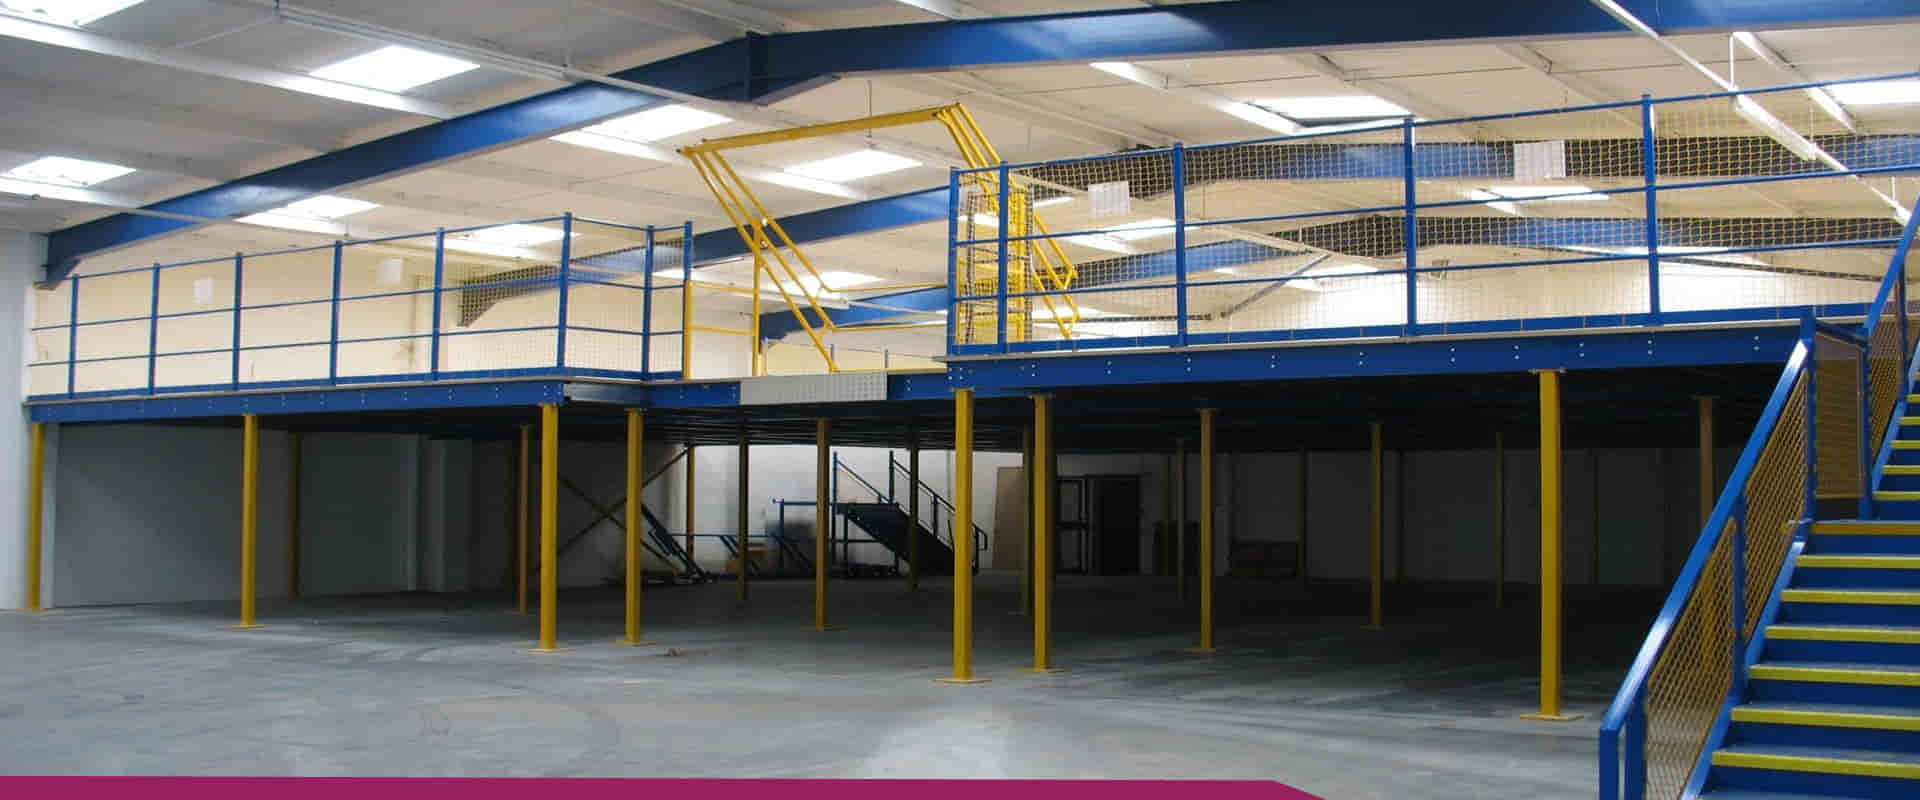 Custom-designed Mezzanine Floor System For Efficient Warehouse Operations